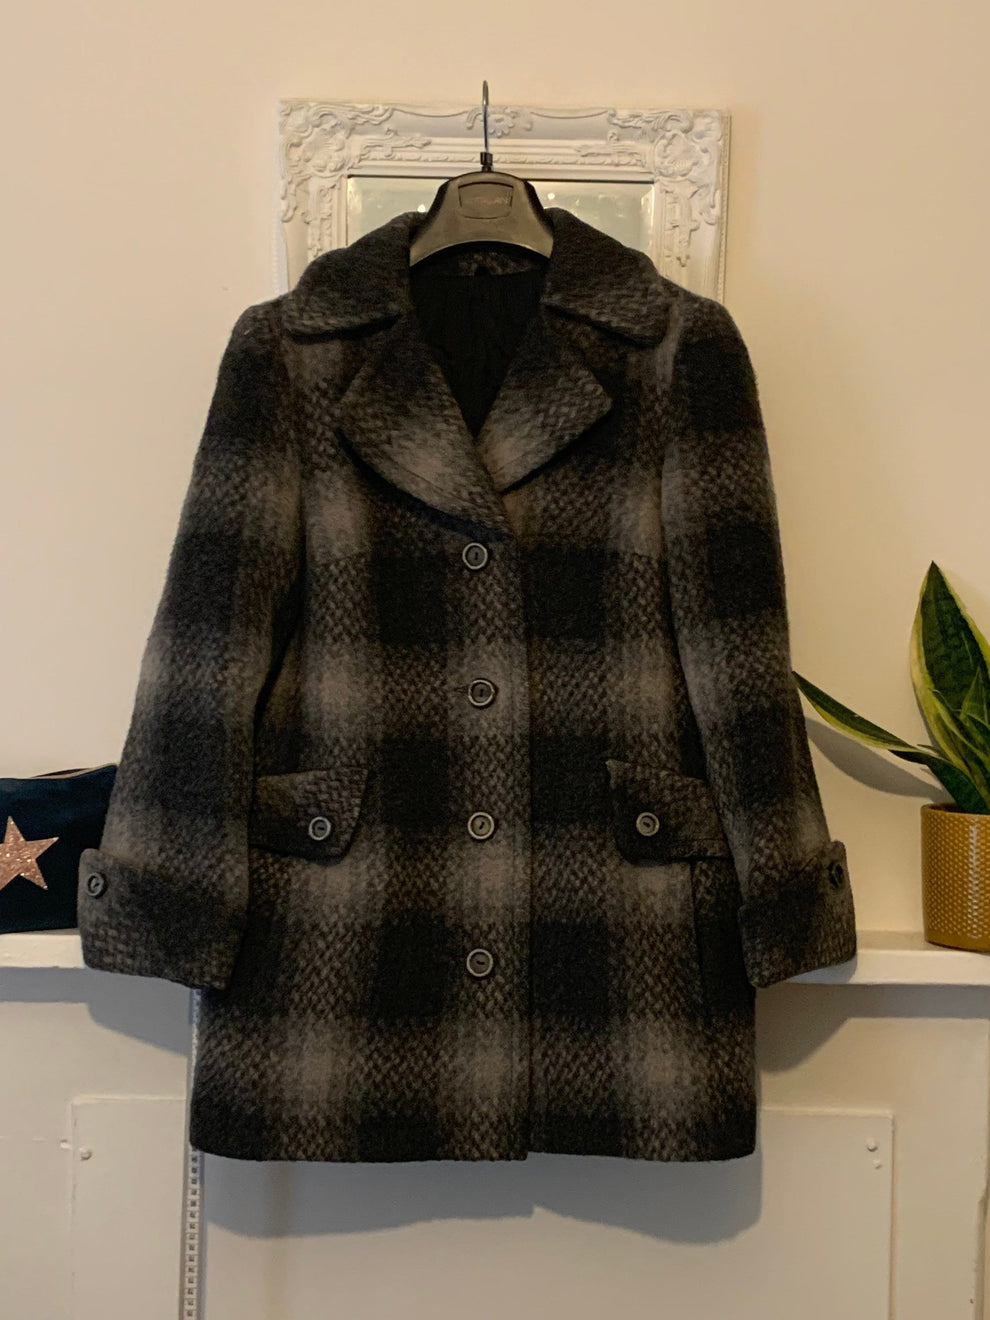 70s Wool Mohair Coat Black and Grey swing coat - Pretty Vintage Coats ...